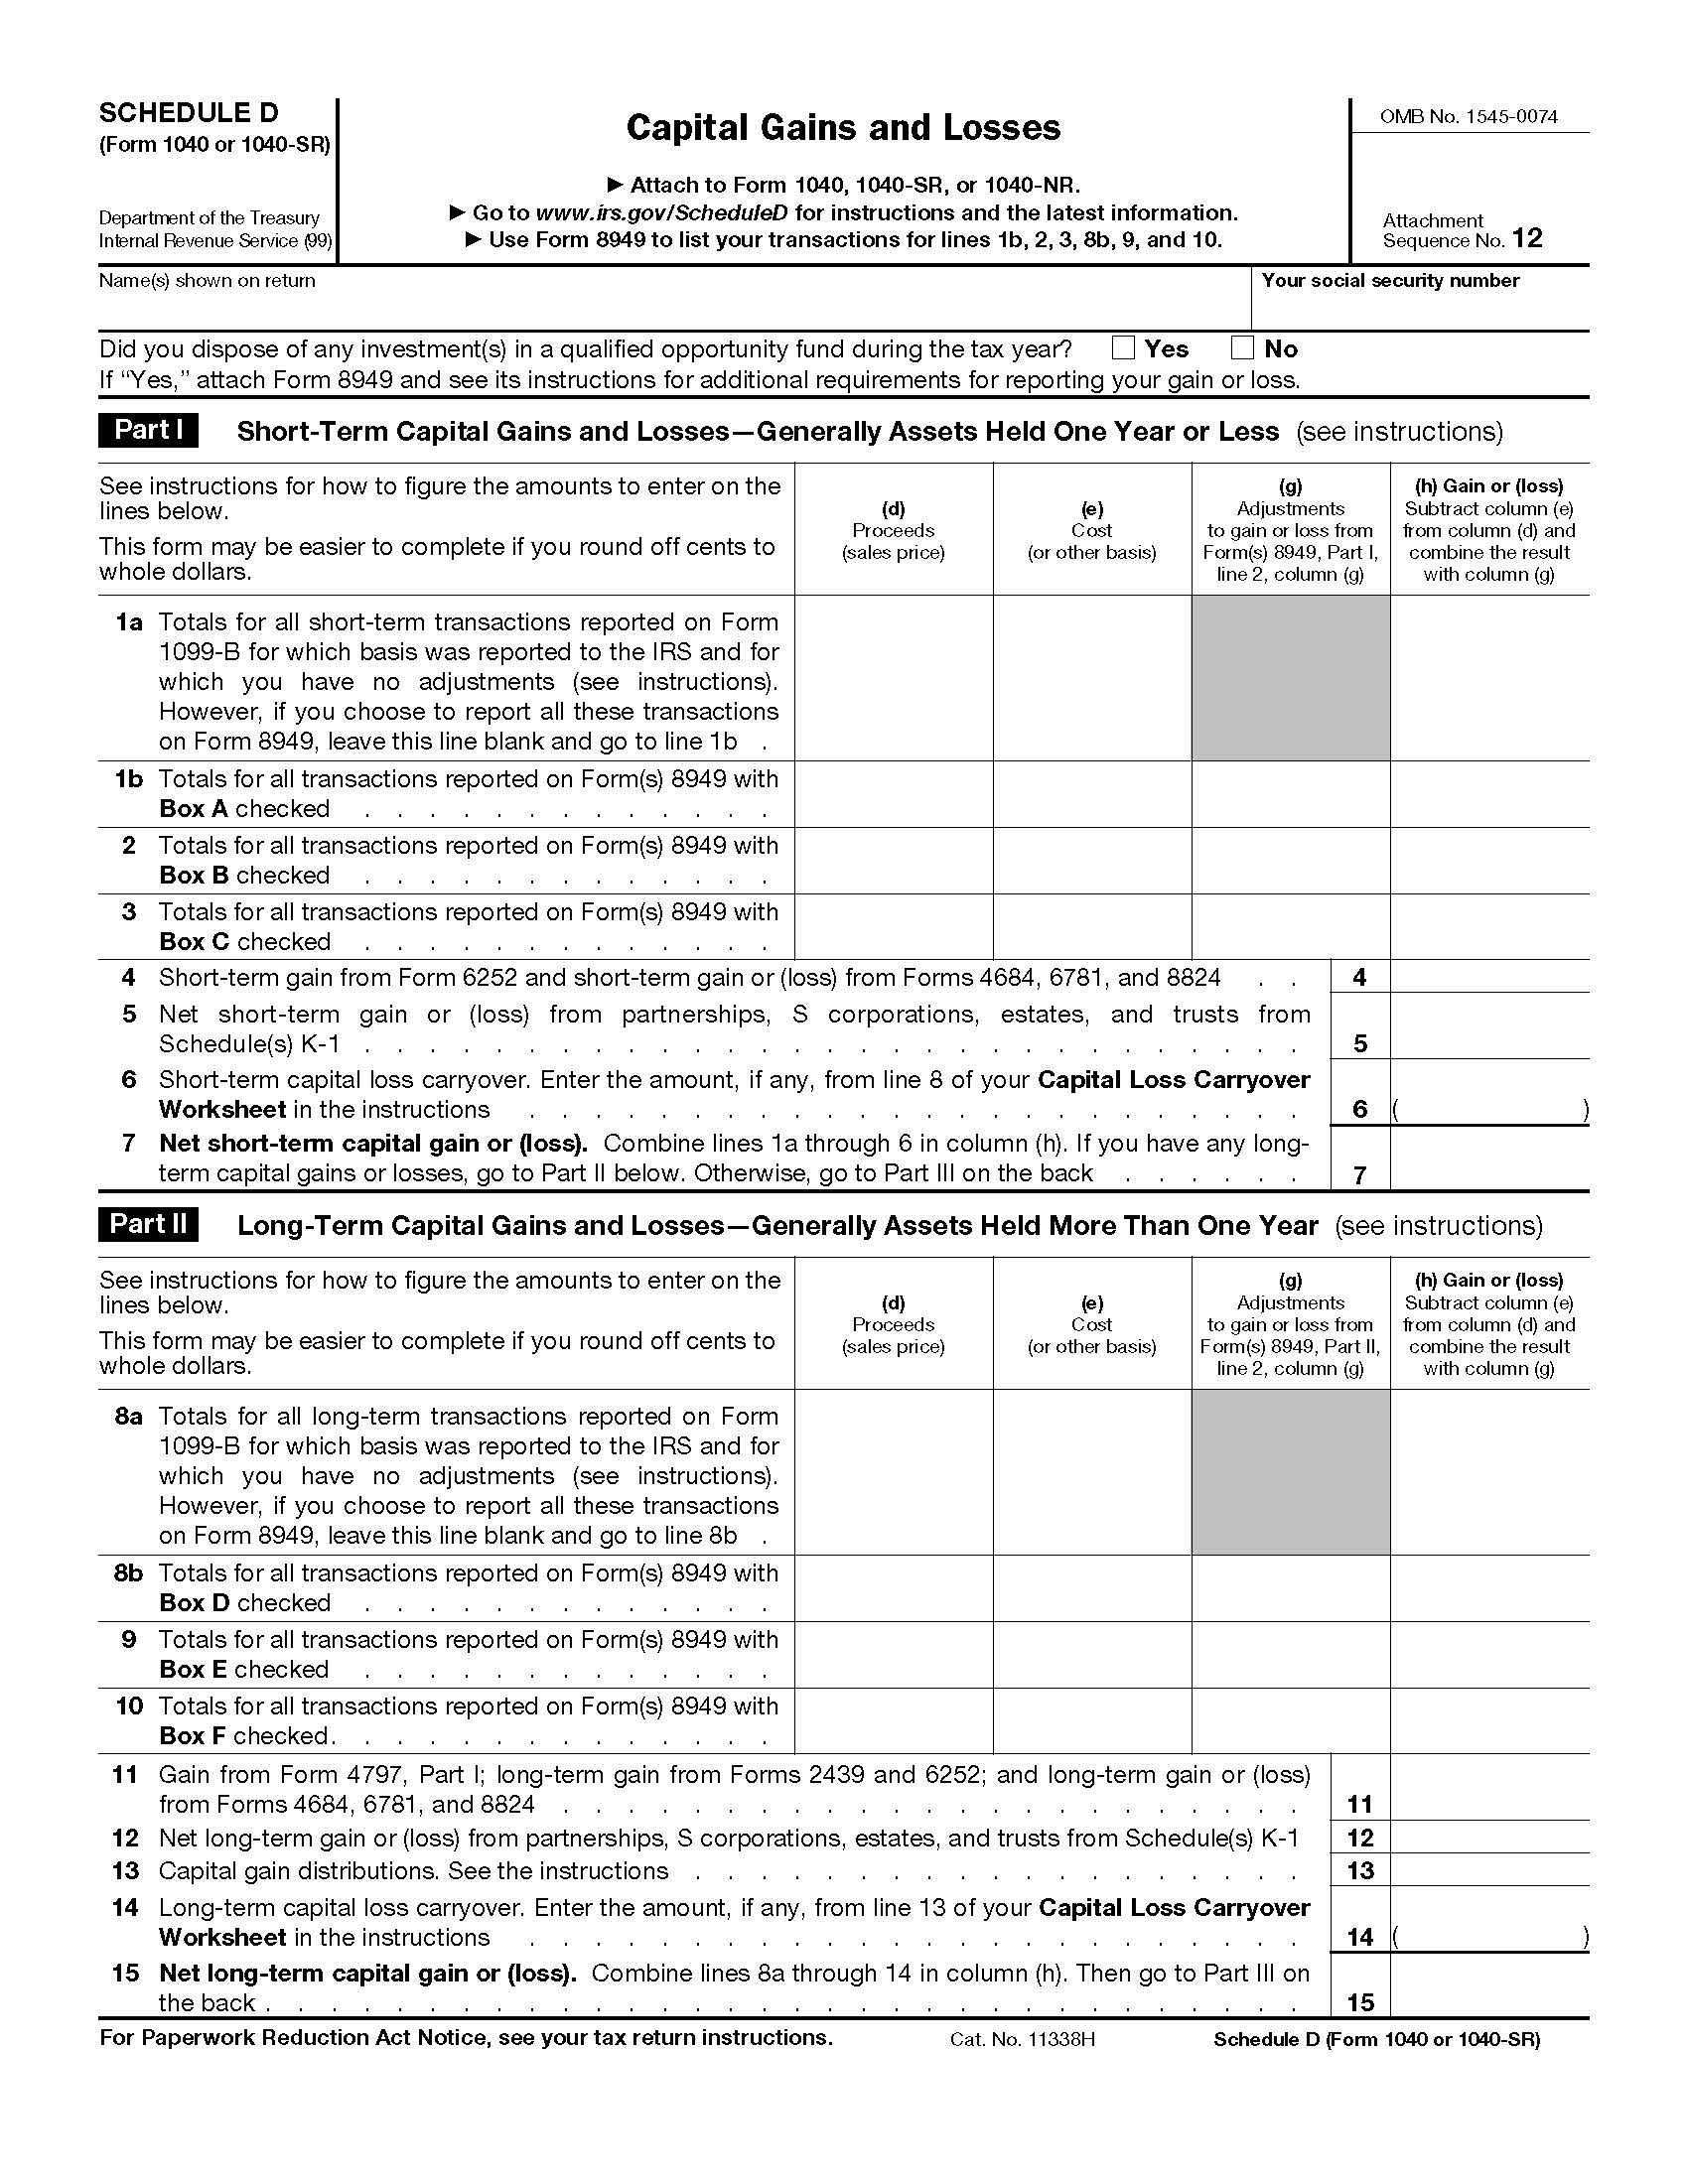 Schedule Tax Forms Archives - Daniel Ahart Tax Service®